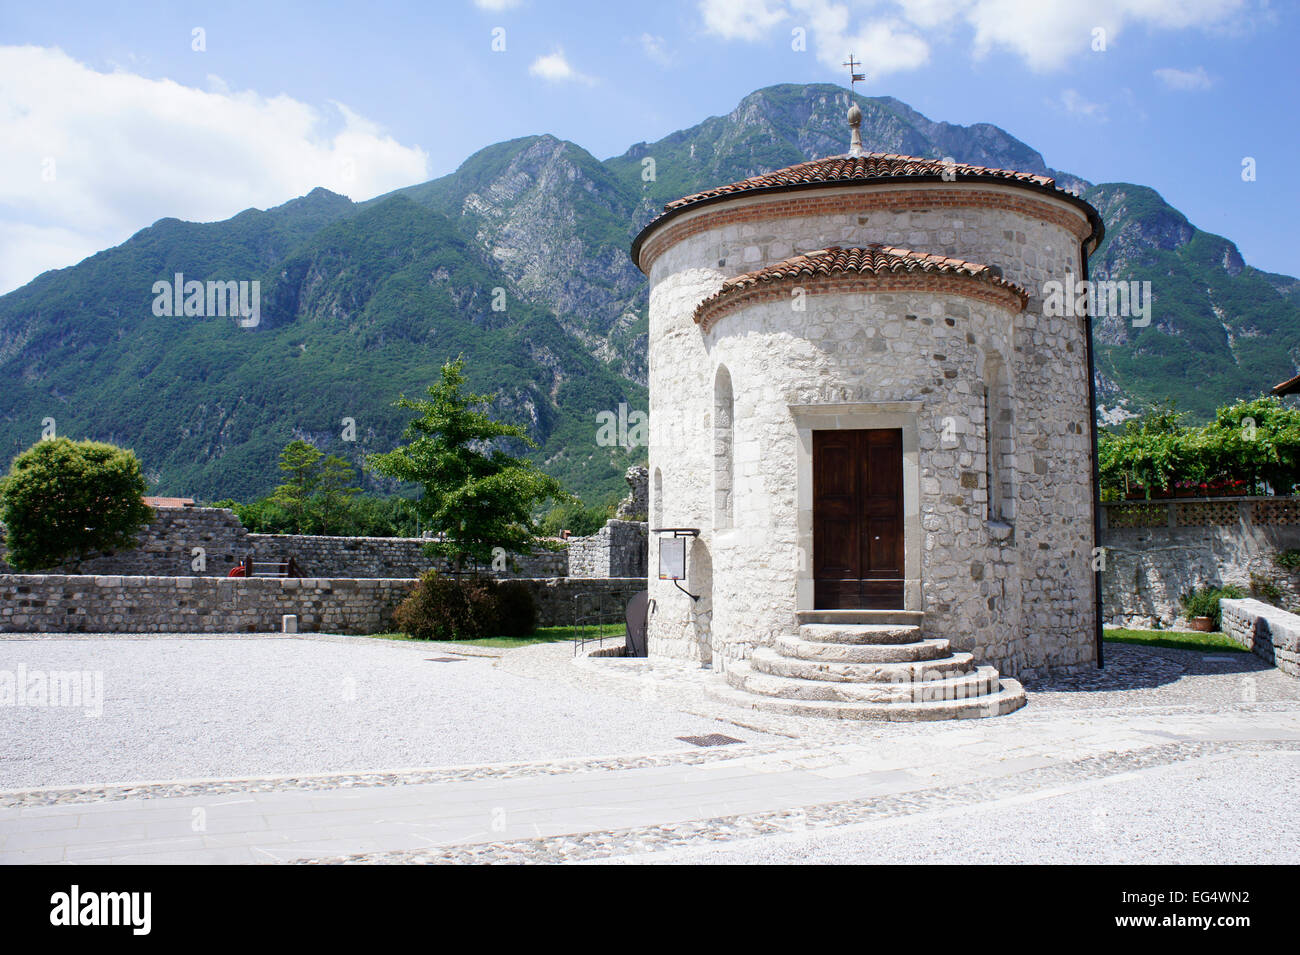 Chapel of Saint Michael in the mountain town of Venzone, Friuli-Venezia Giulia, northern Italy Stock Photo